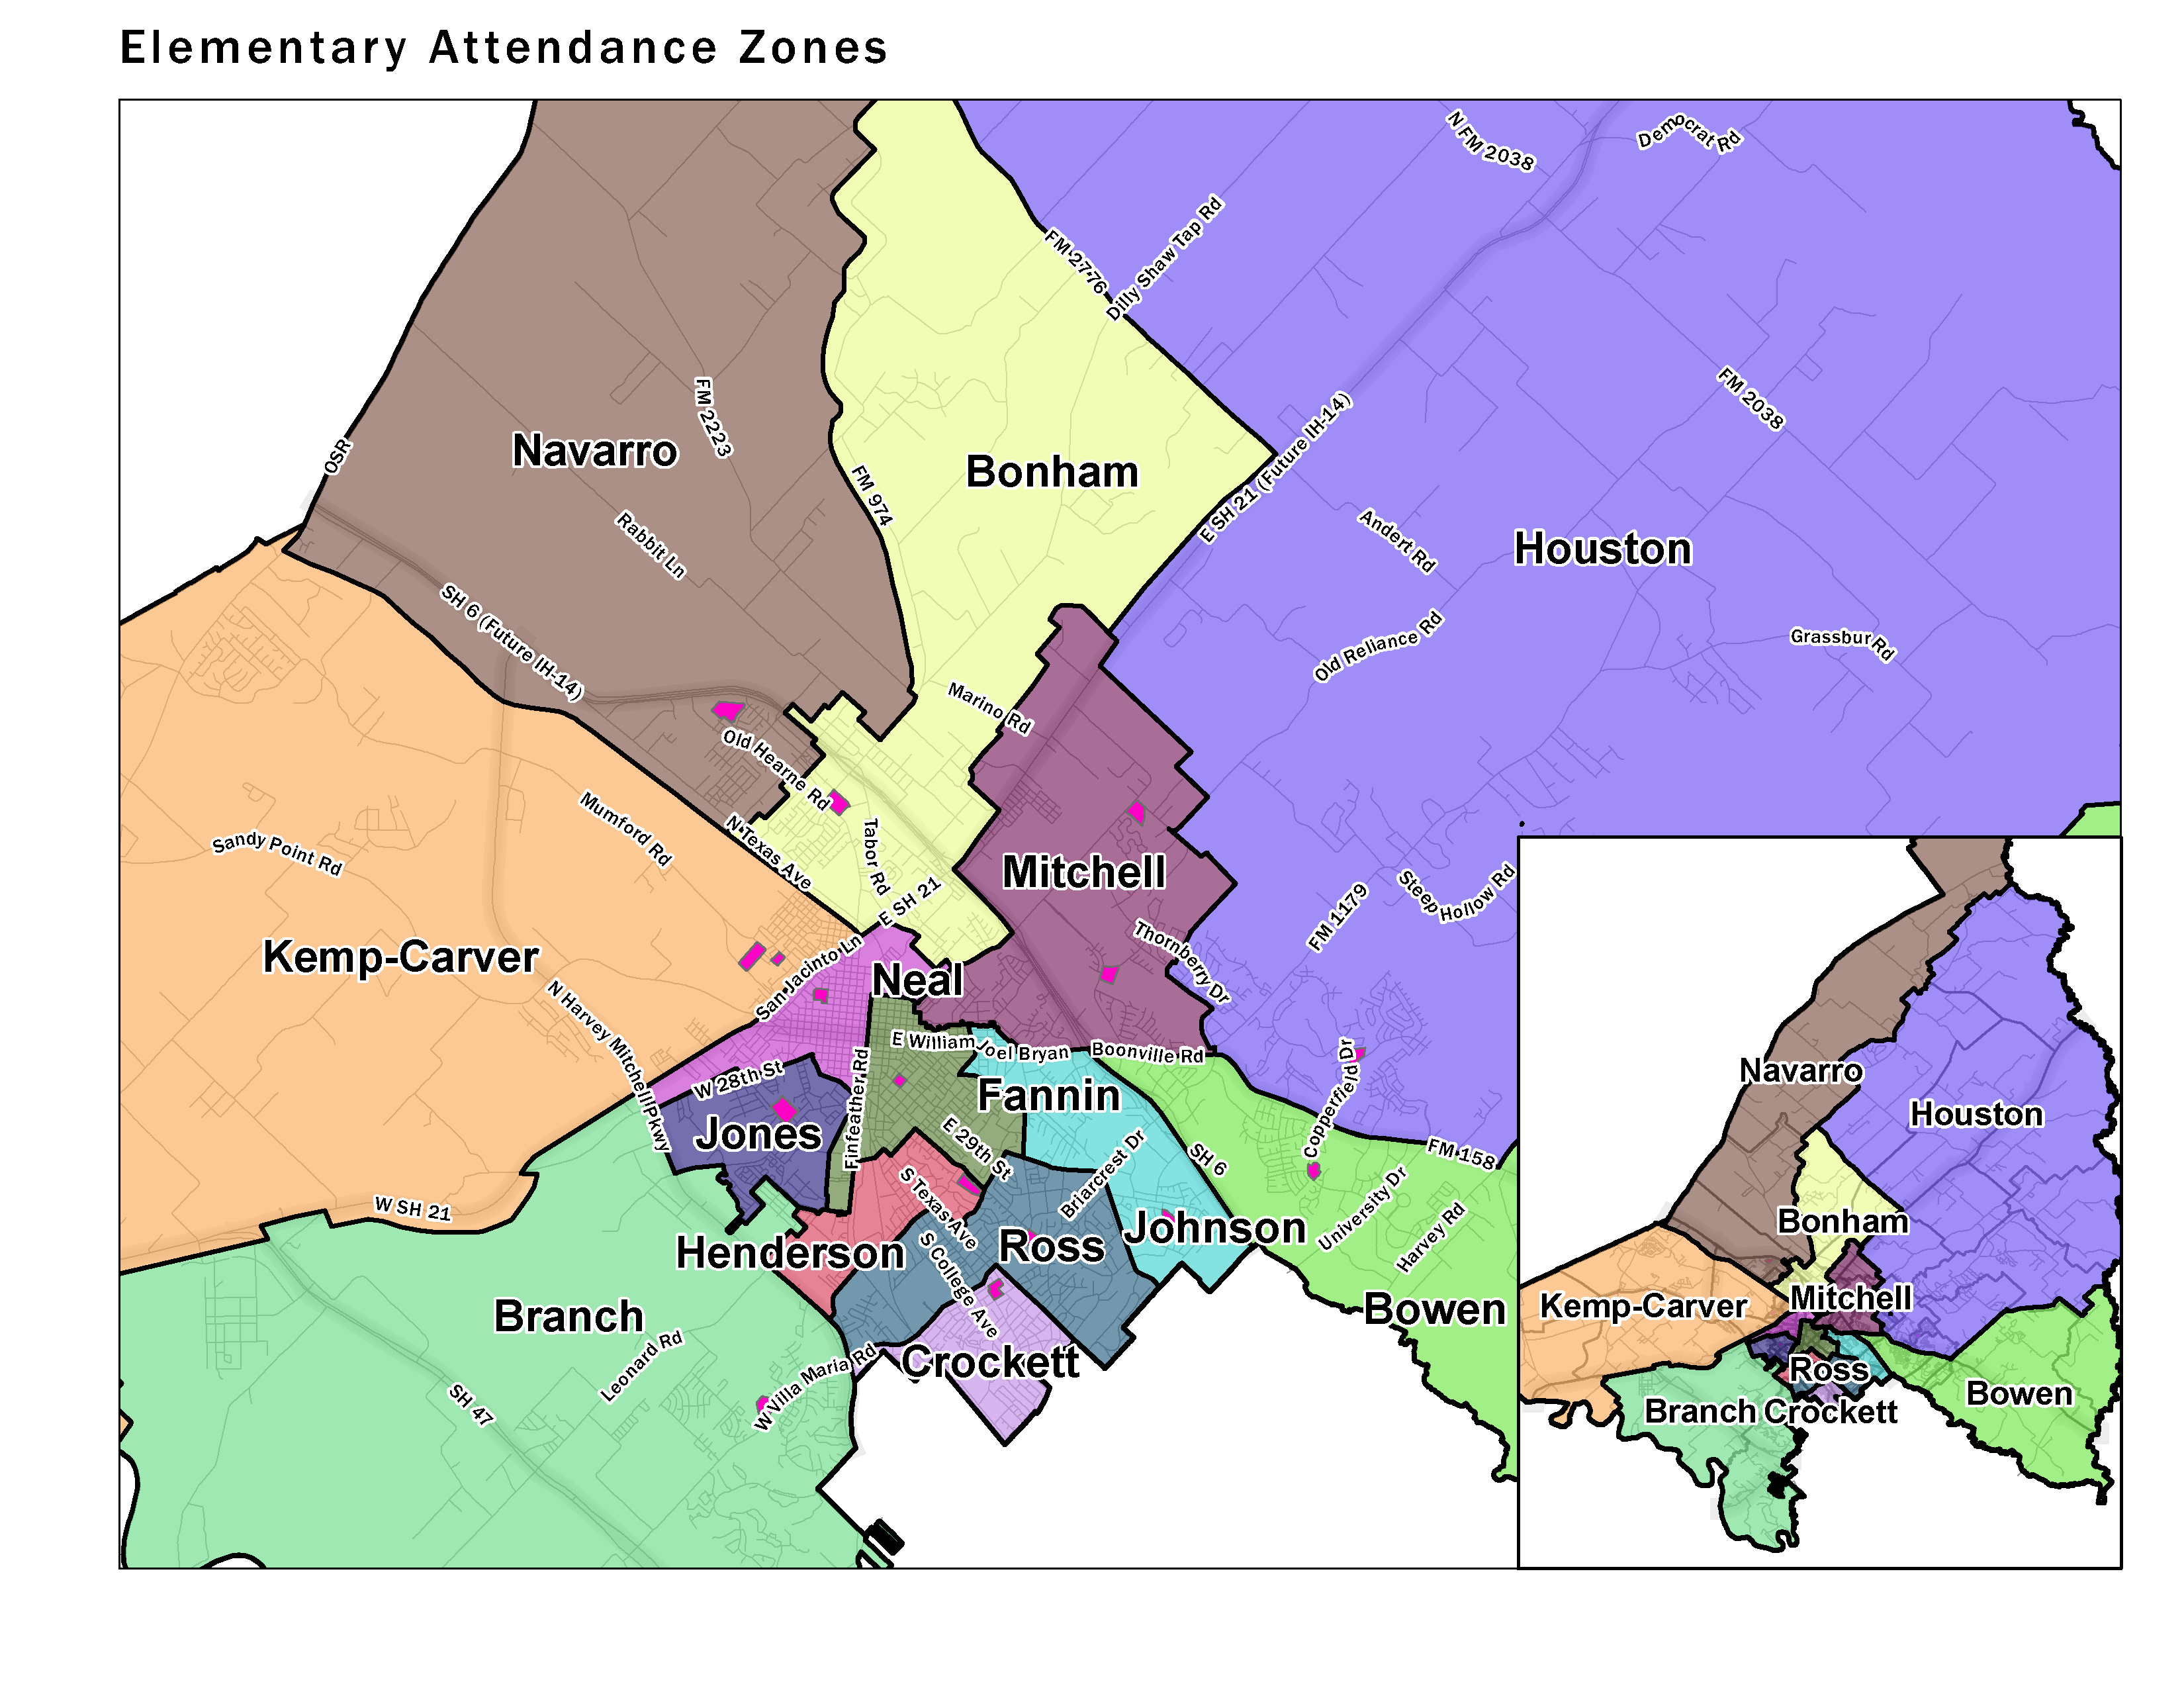 Elementary Attendance Zones